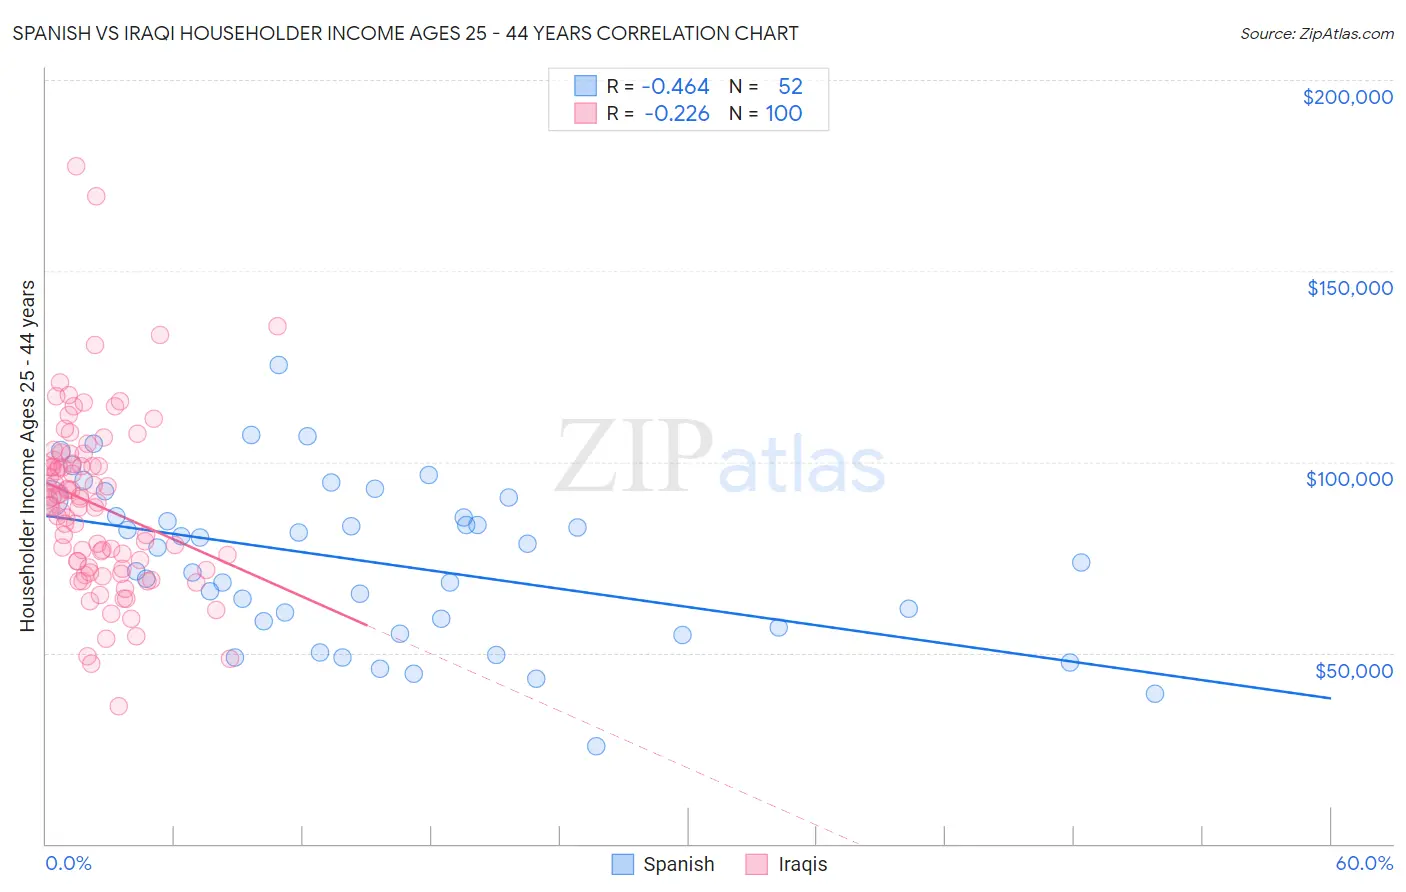 Spanish vs Iraqi Householder Income Ages 25 - 44 years